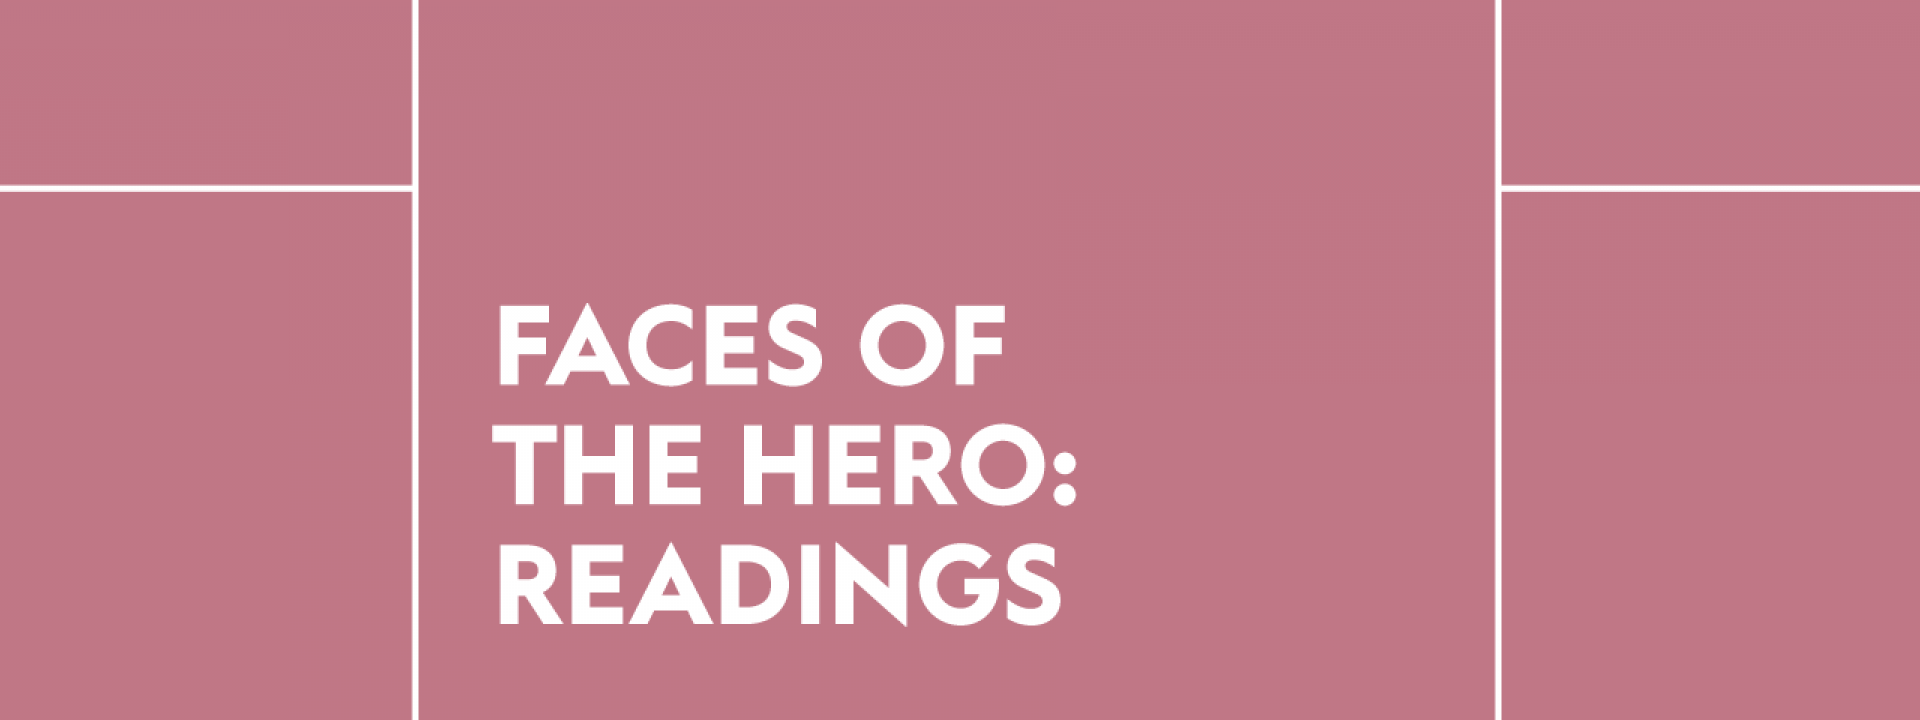 Faces of the Hero: Readings - Εικόνα